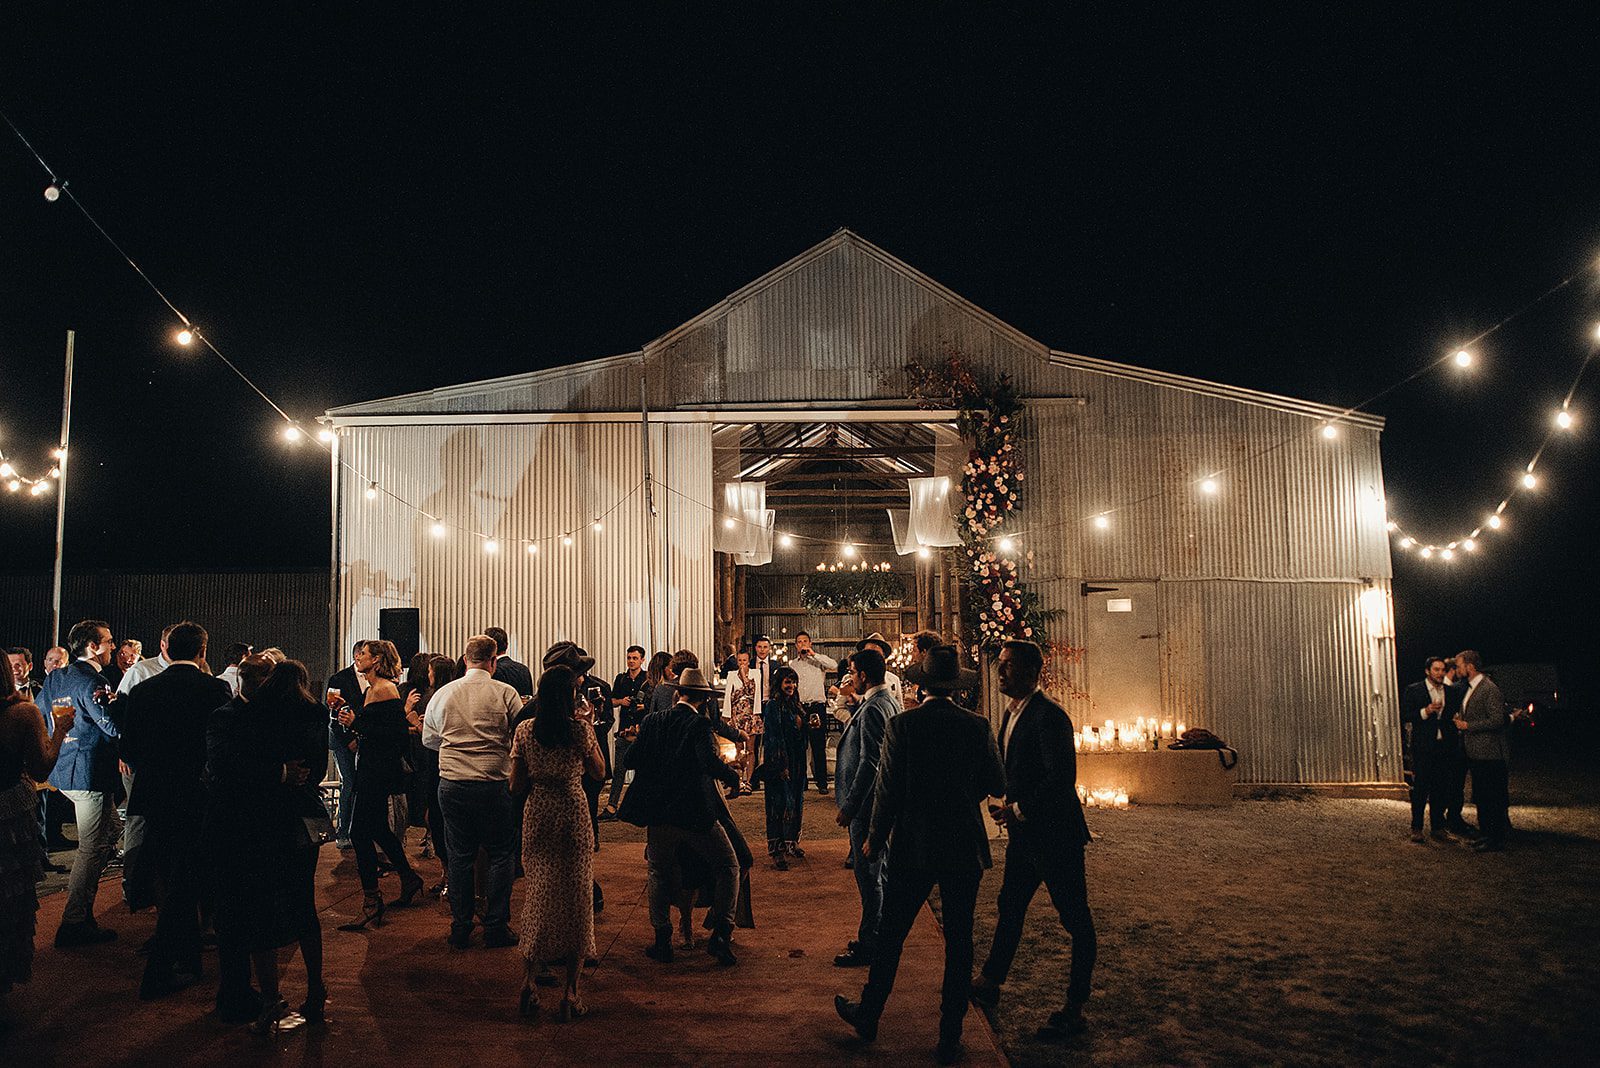 Barn Wedding Venue on a farm in country NSW. Wedding guests dance under festoon lights in the night.